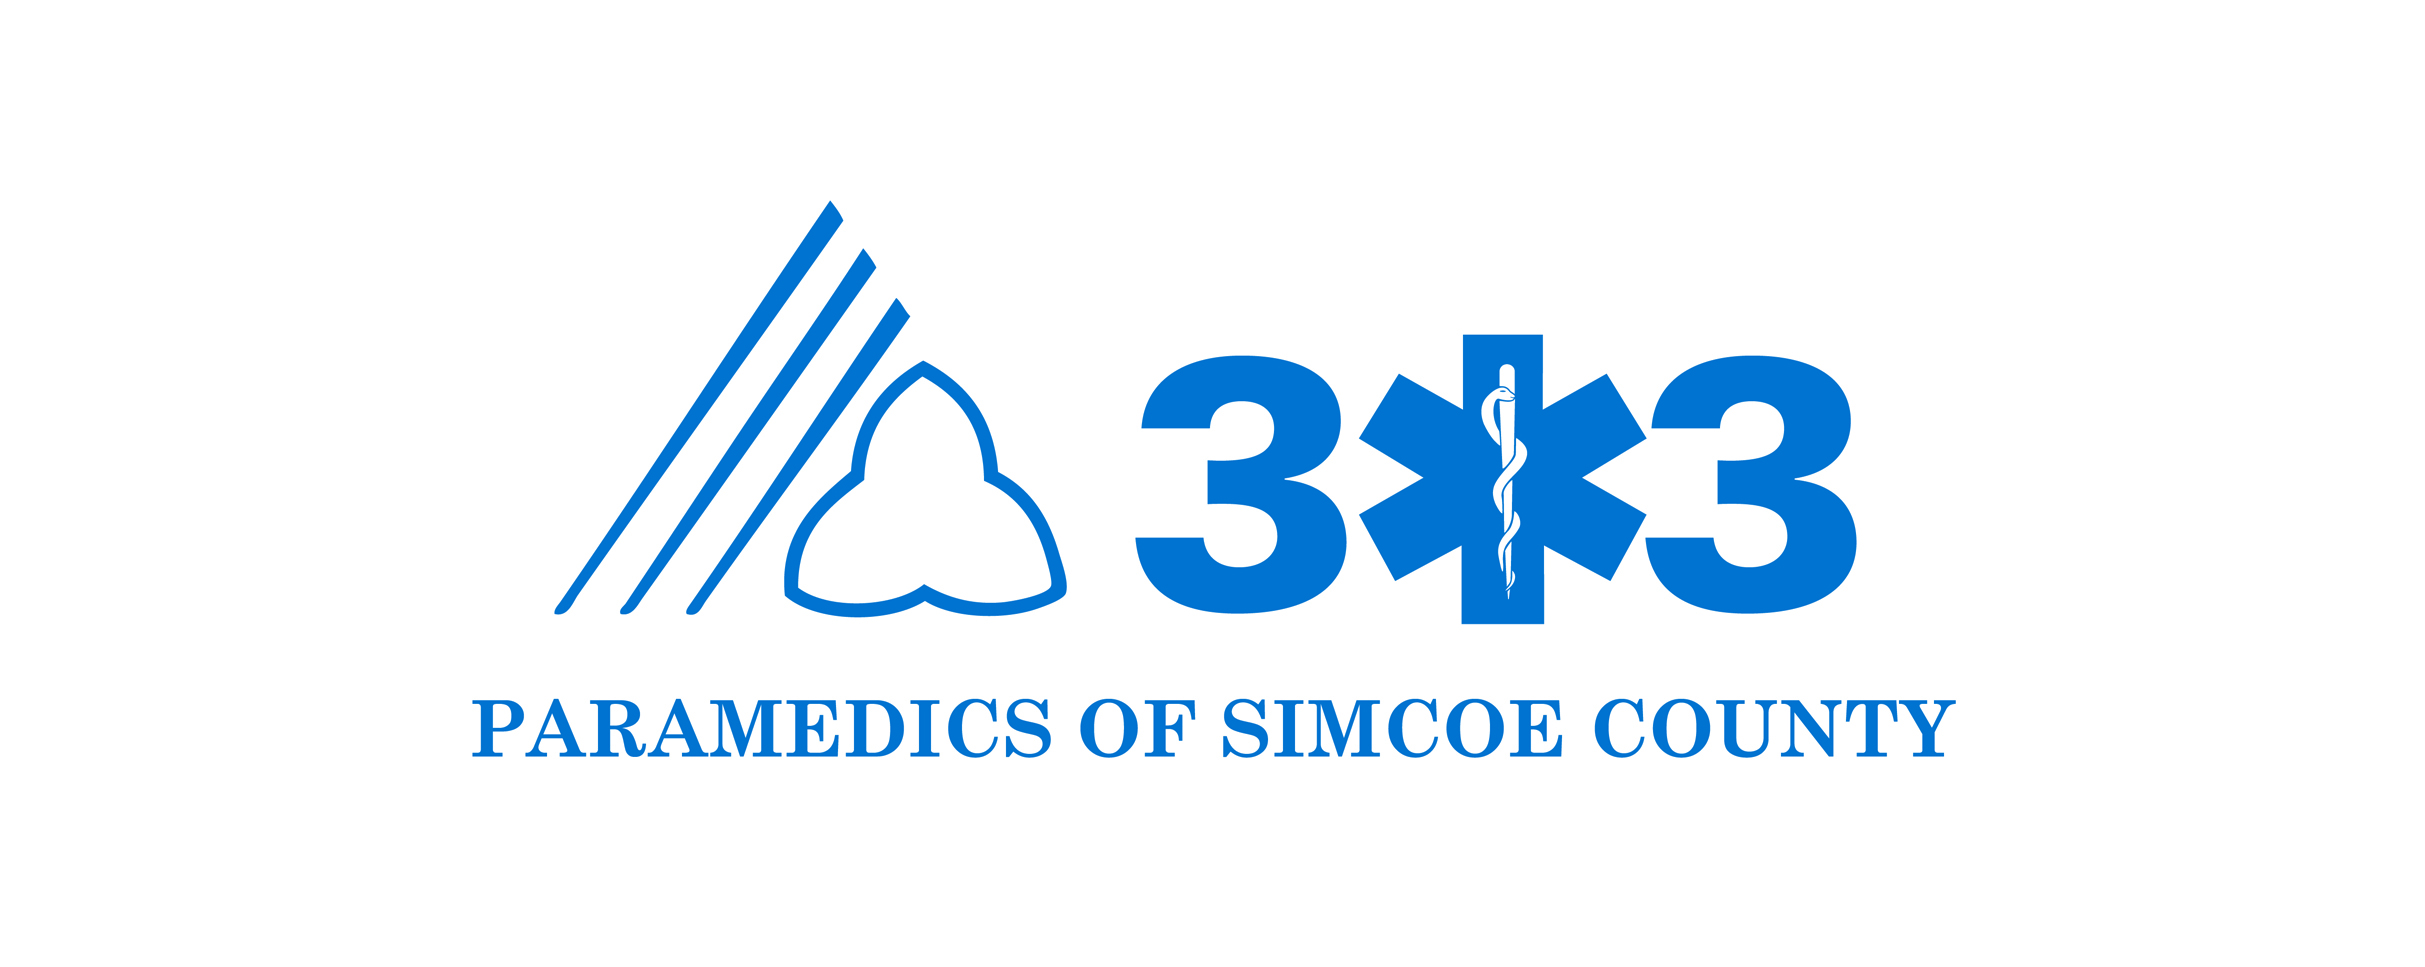 Paramedics of simcoe county logo